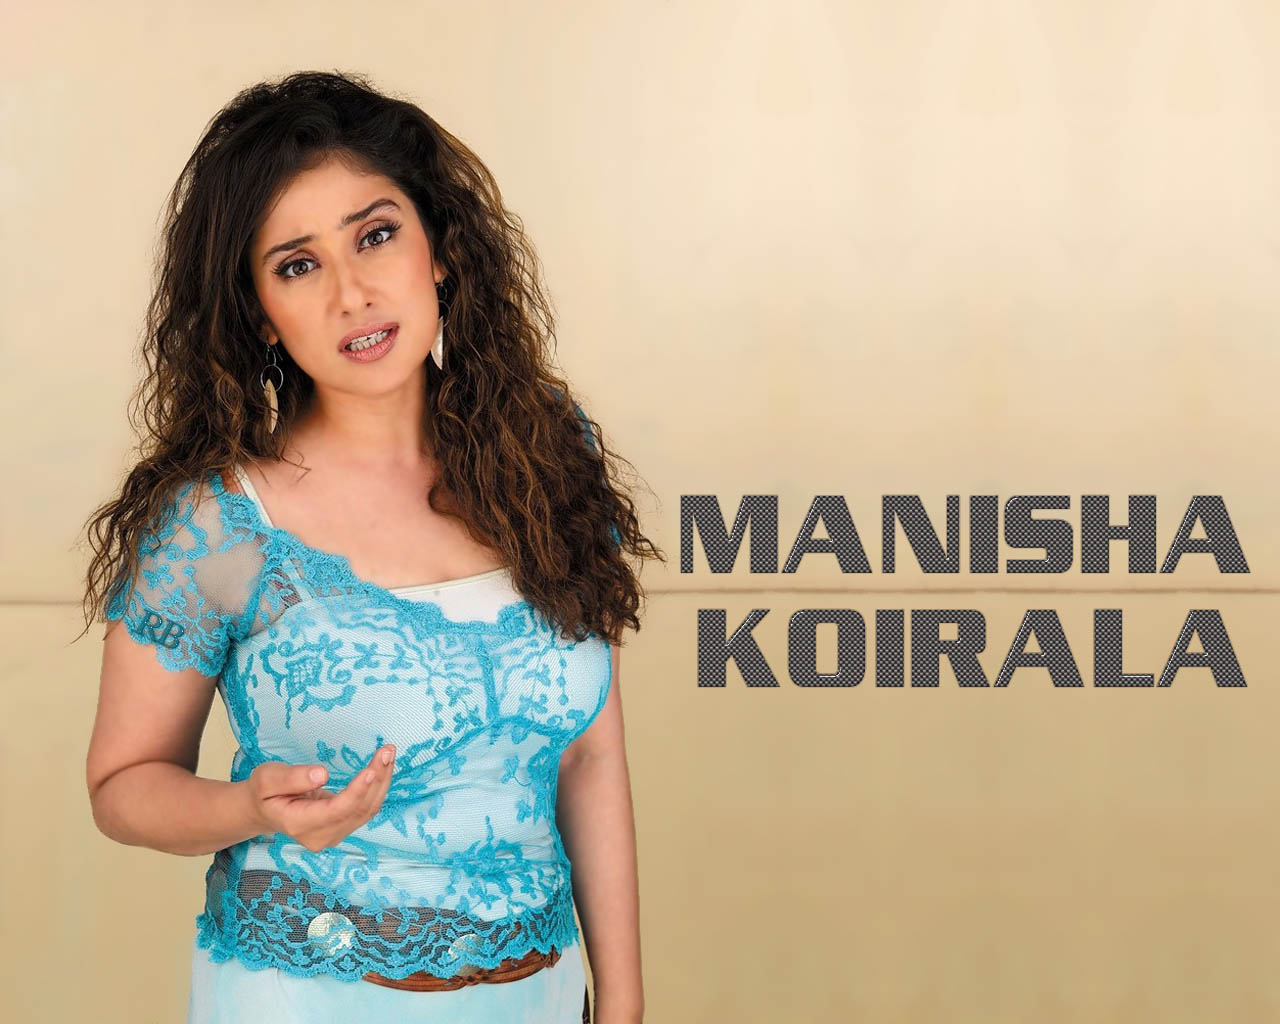 Manisha koirala movie photos